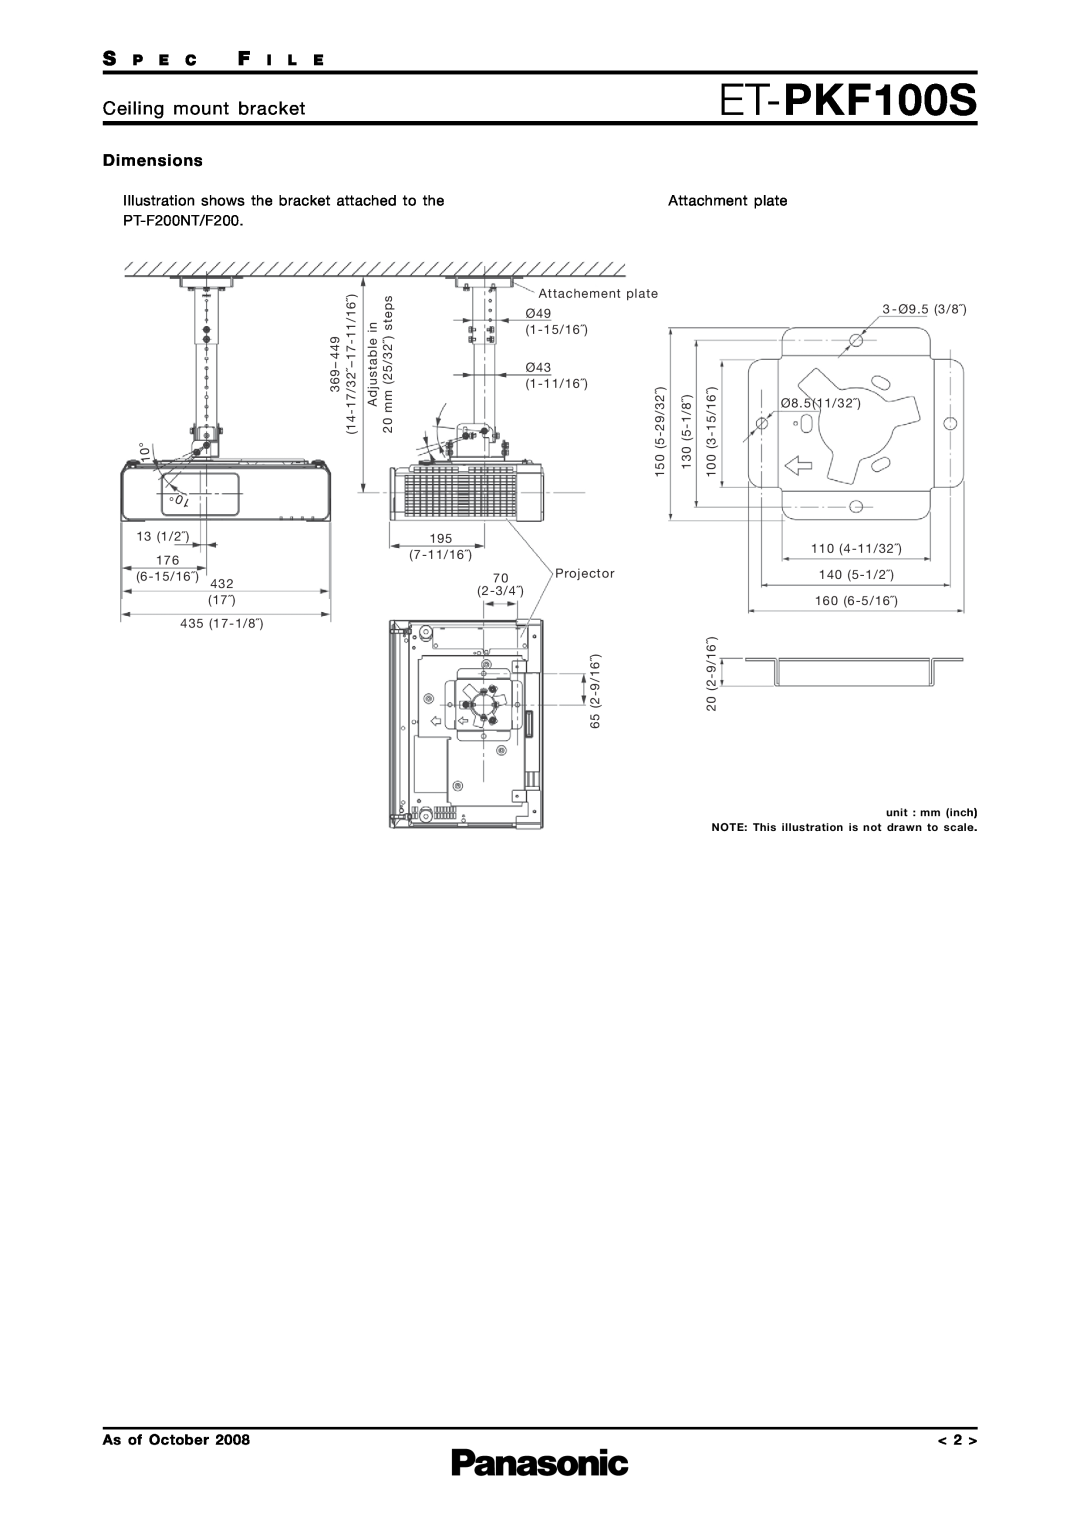 Panasonic ET-PKF100S dimensions Ceiling mount bracket, Dimensions, S P E C F I L E, As of October 